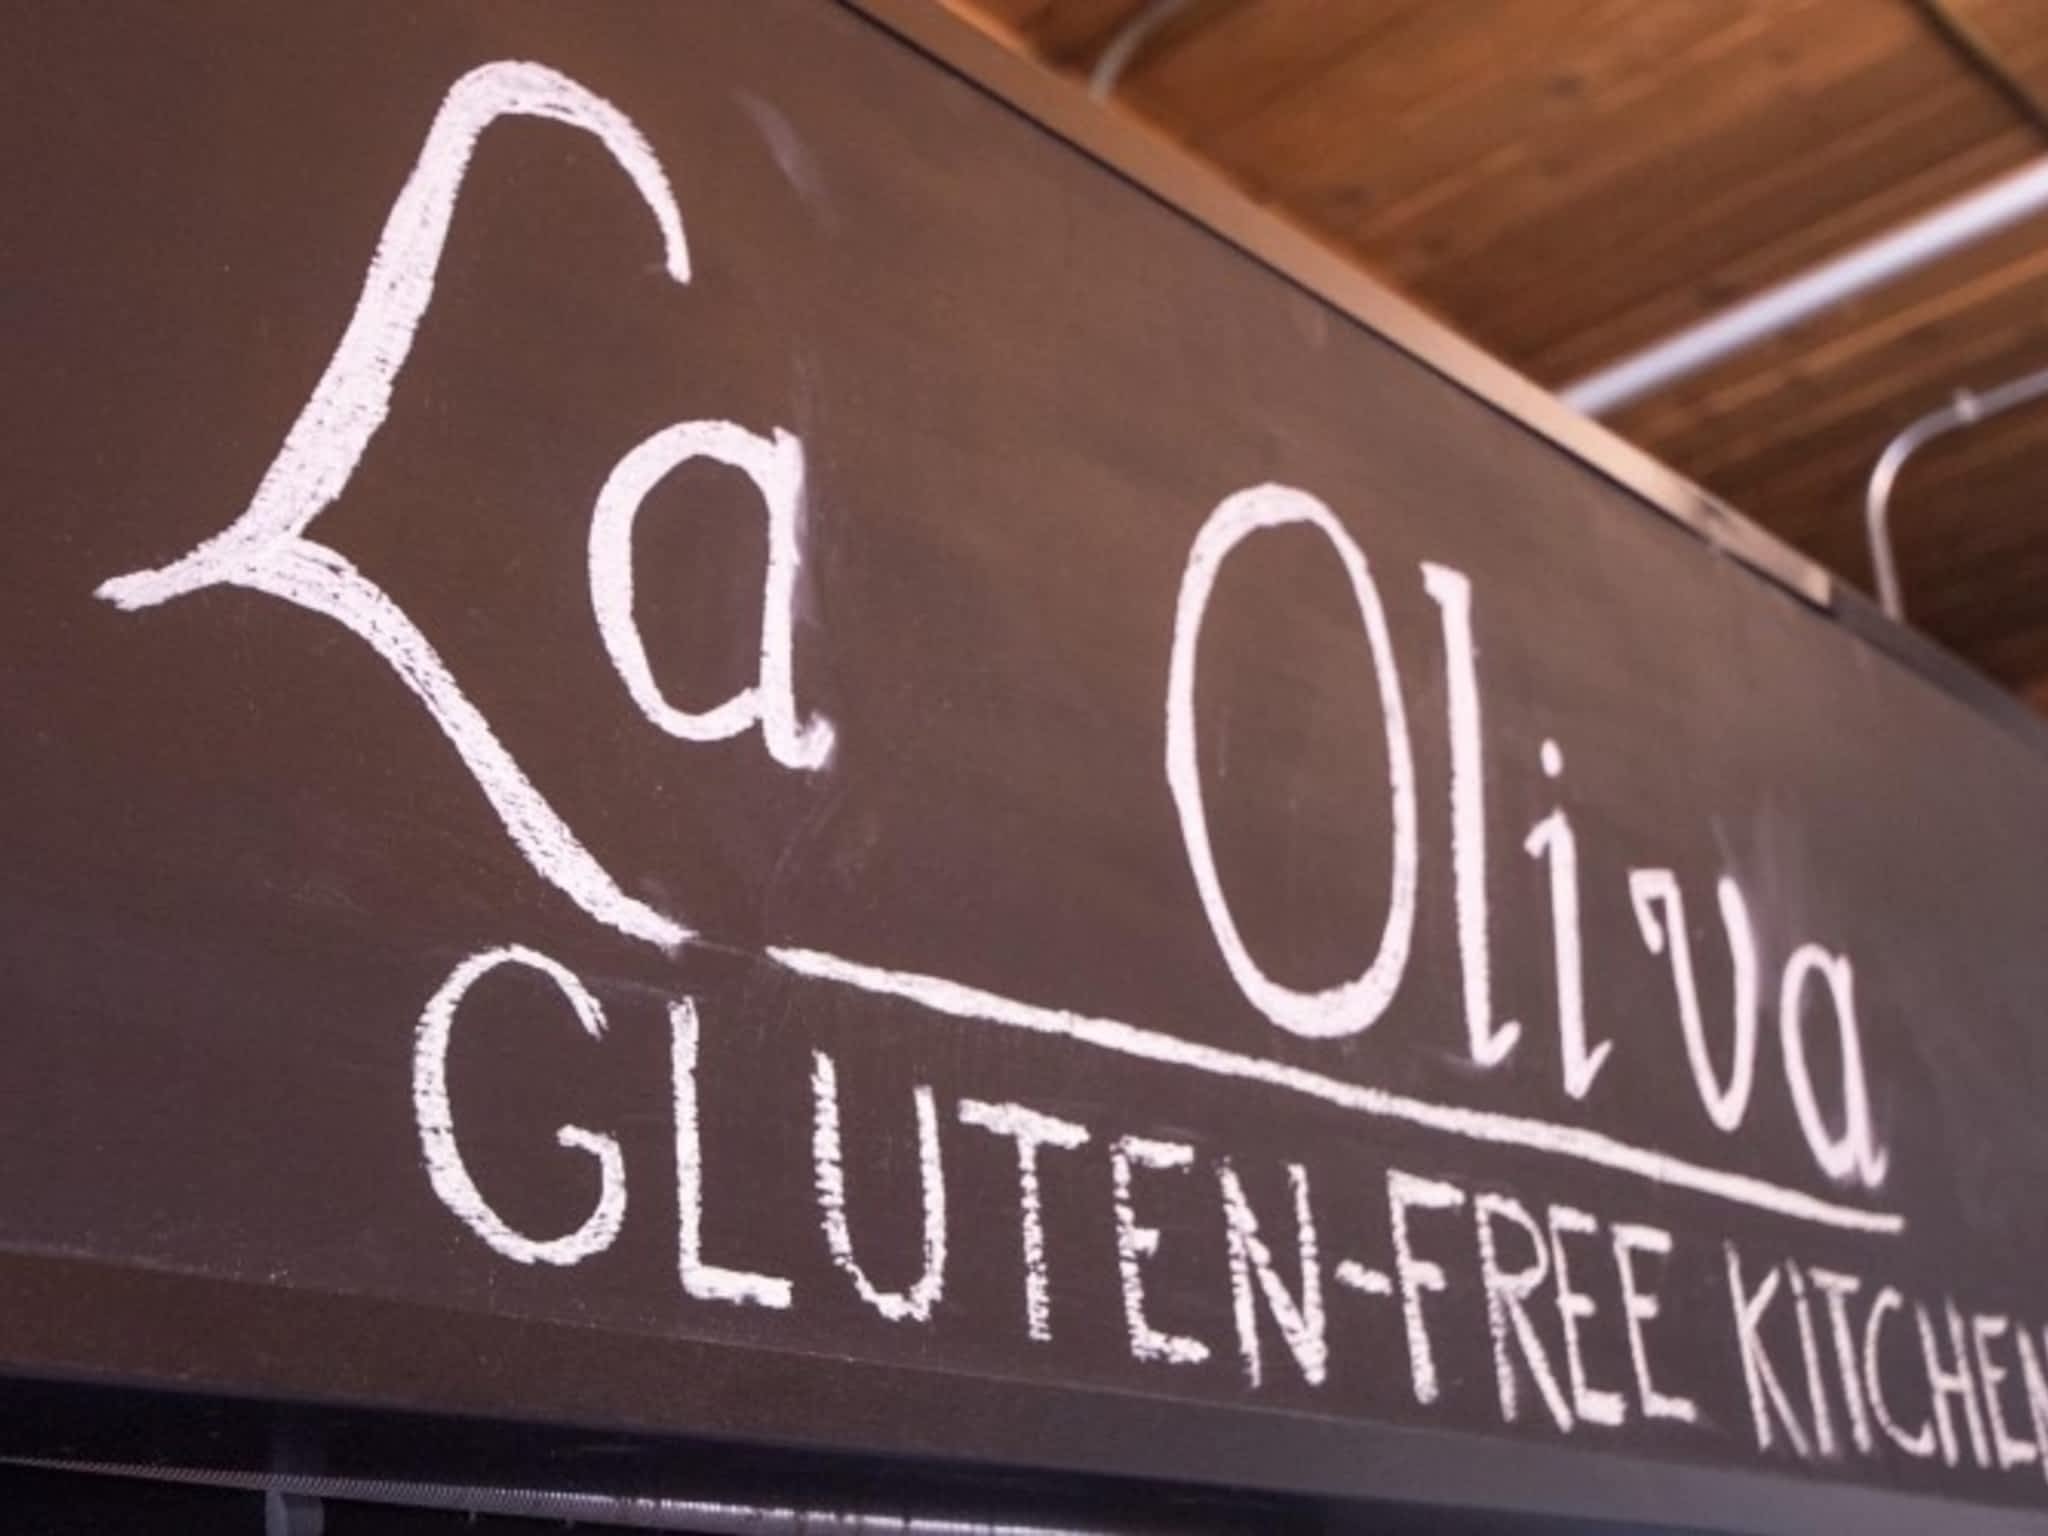 photo La Oliva Gluten-Free Kitchen